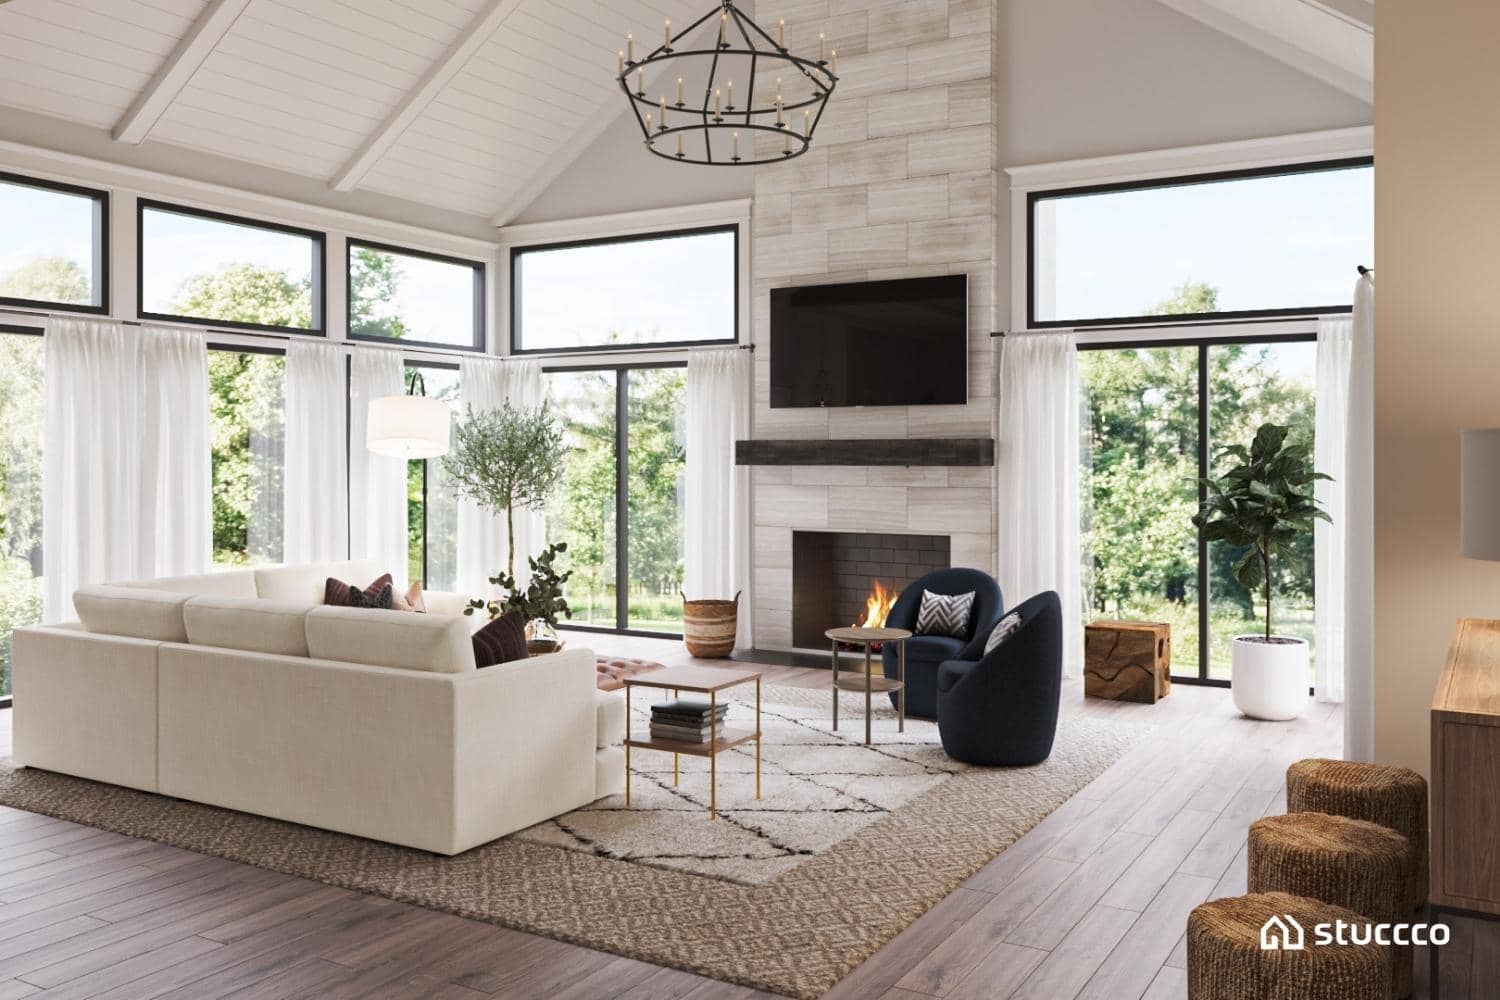 Stuccco large living room, online interior design, natural light, natural textures